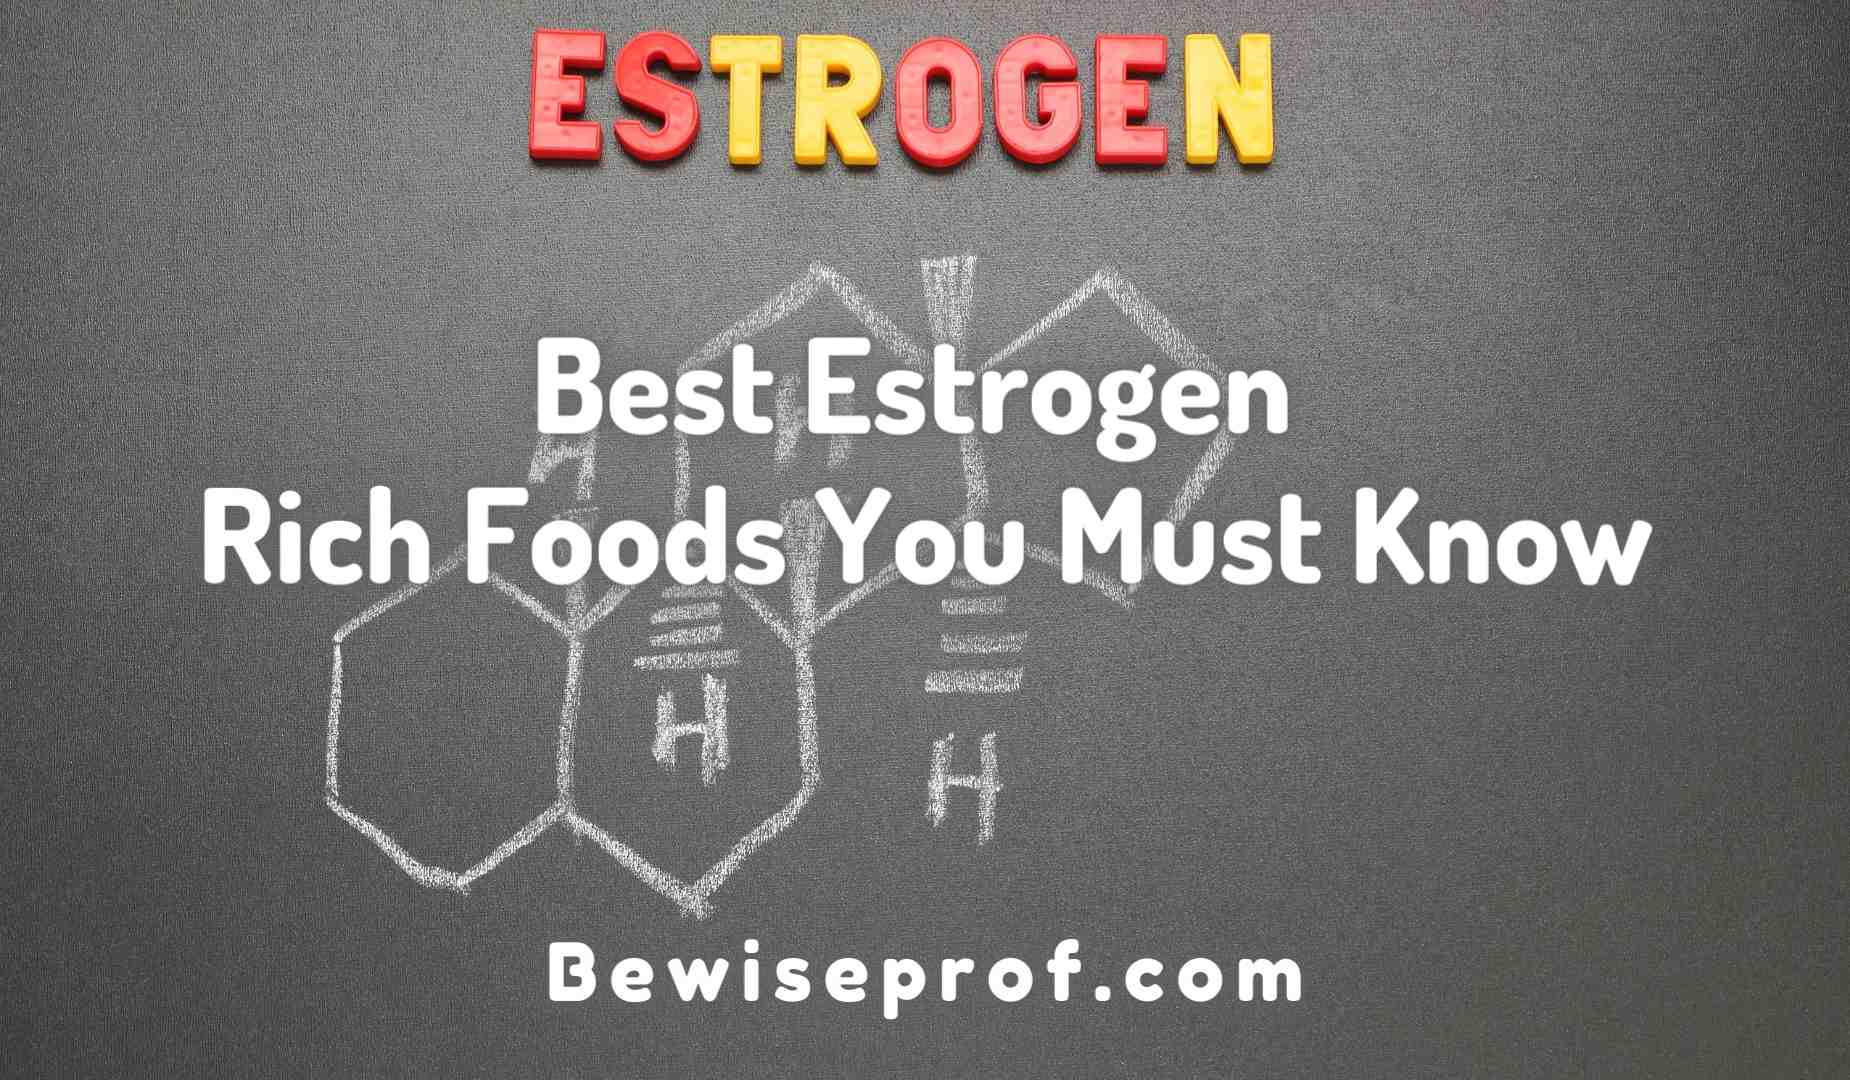 Best Estrogen Rich Foods You Must Know